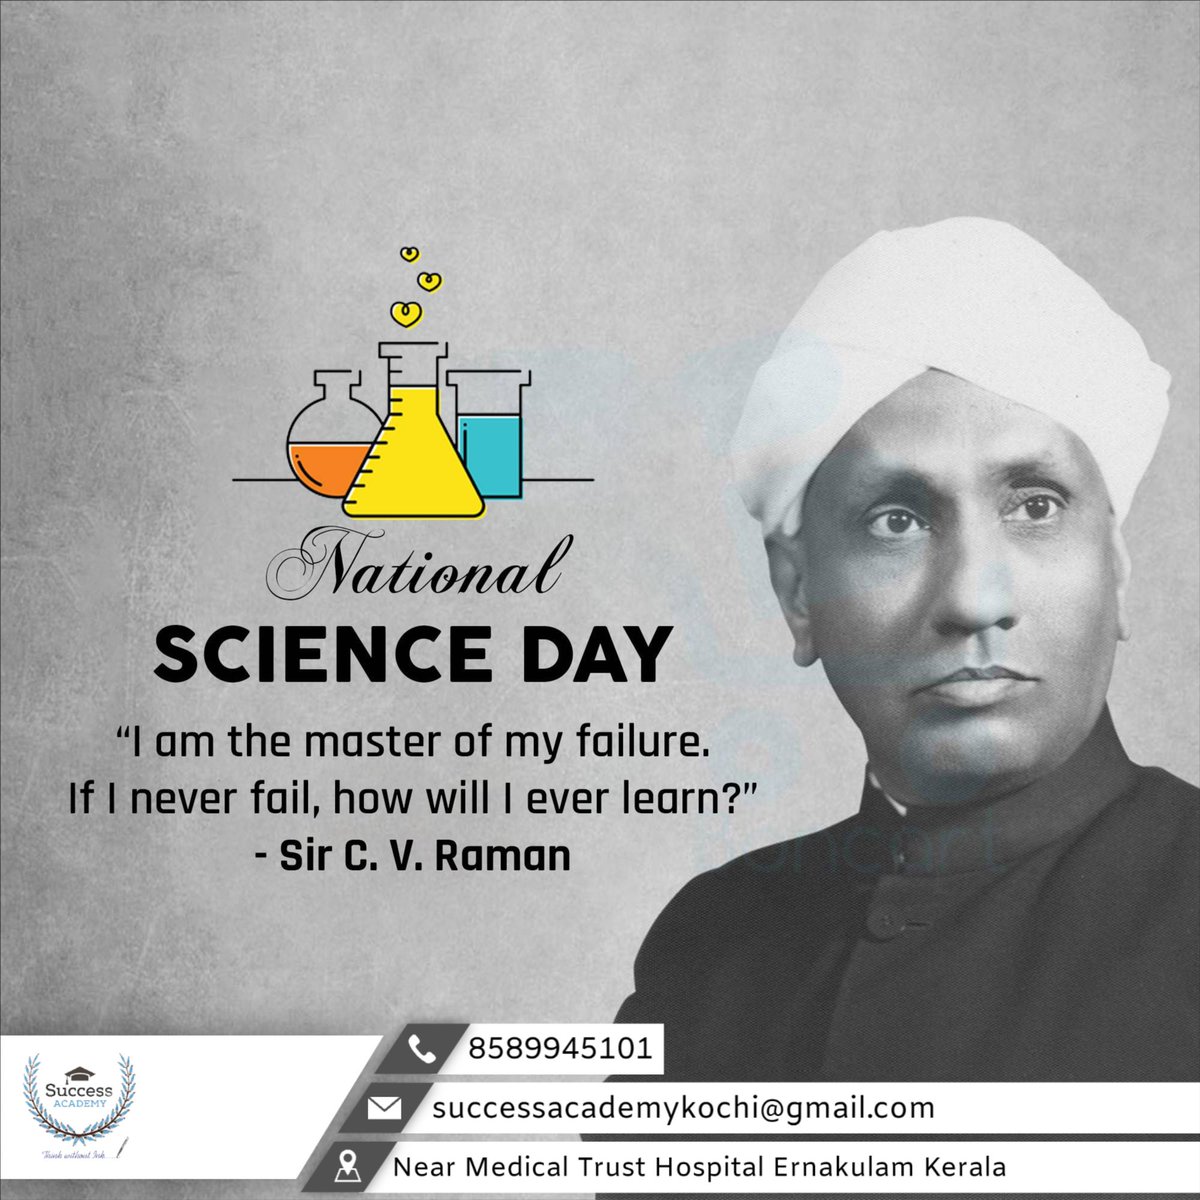 #NationalScienceDay #ScienceDay #CVRaman #RamanEffect #ScienceCelebration
#InnovationDay #ScientificDiscovery #ScienceInIndia #ScienceAndSociety #TechInnovation #DiscoveriesInScience #ScienceEducation #ScientificAdvancement #SSCCoaching #BankCoaching #SuccessAcademyKochi